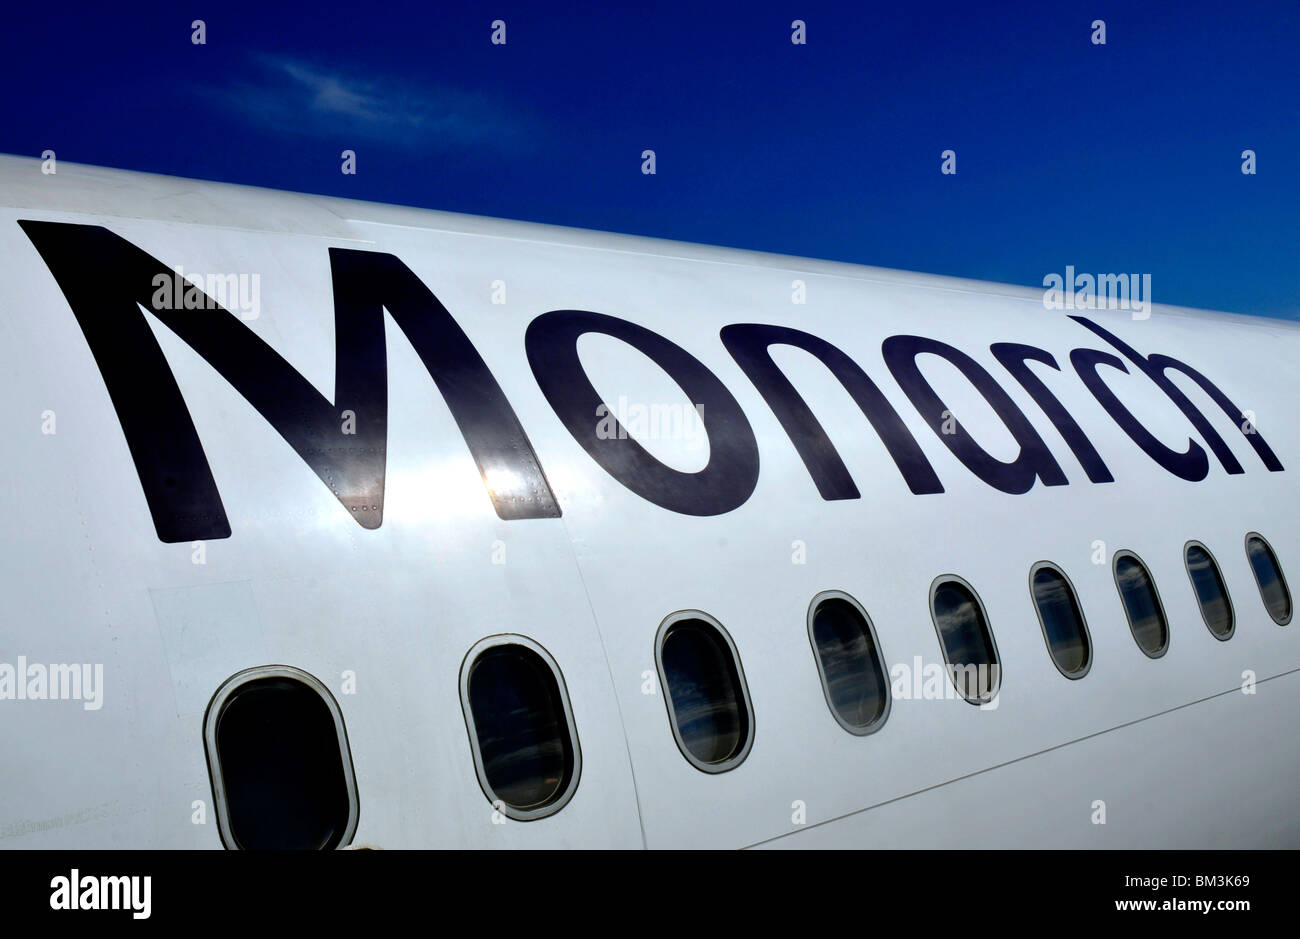 Monarch Airlines, Monarch aircraft, Monarch Airlines logo Stock Photo